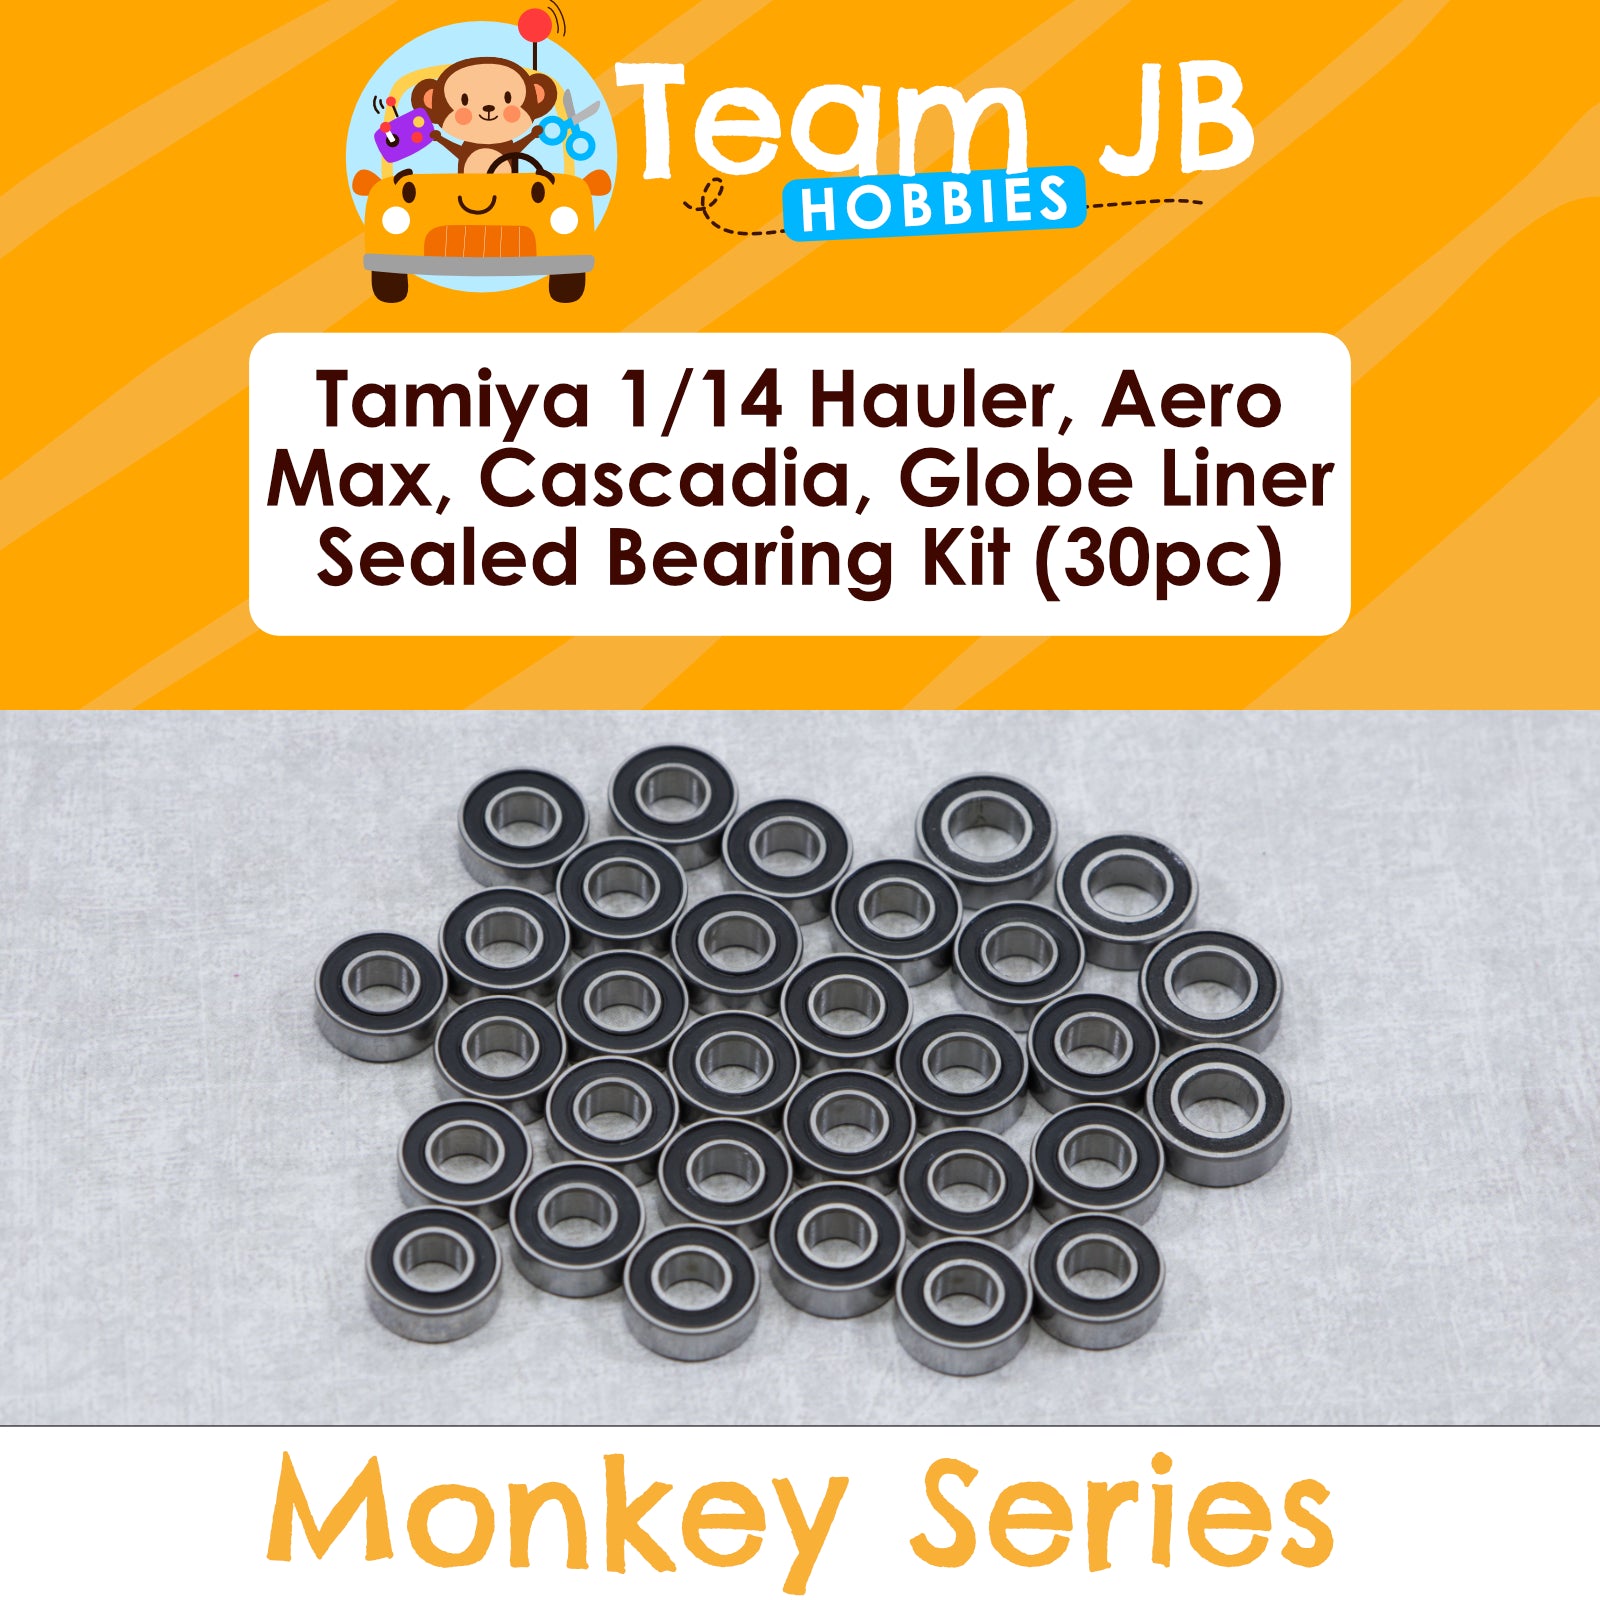 Tamiya 1/14 Hauler, Aero Max, Cascadia, Globe Liner - Sealed Bearing Kit